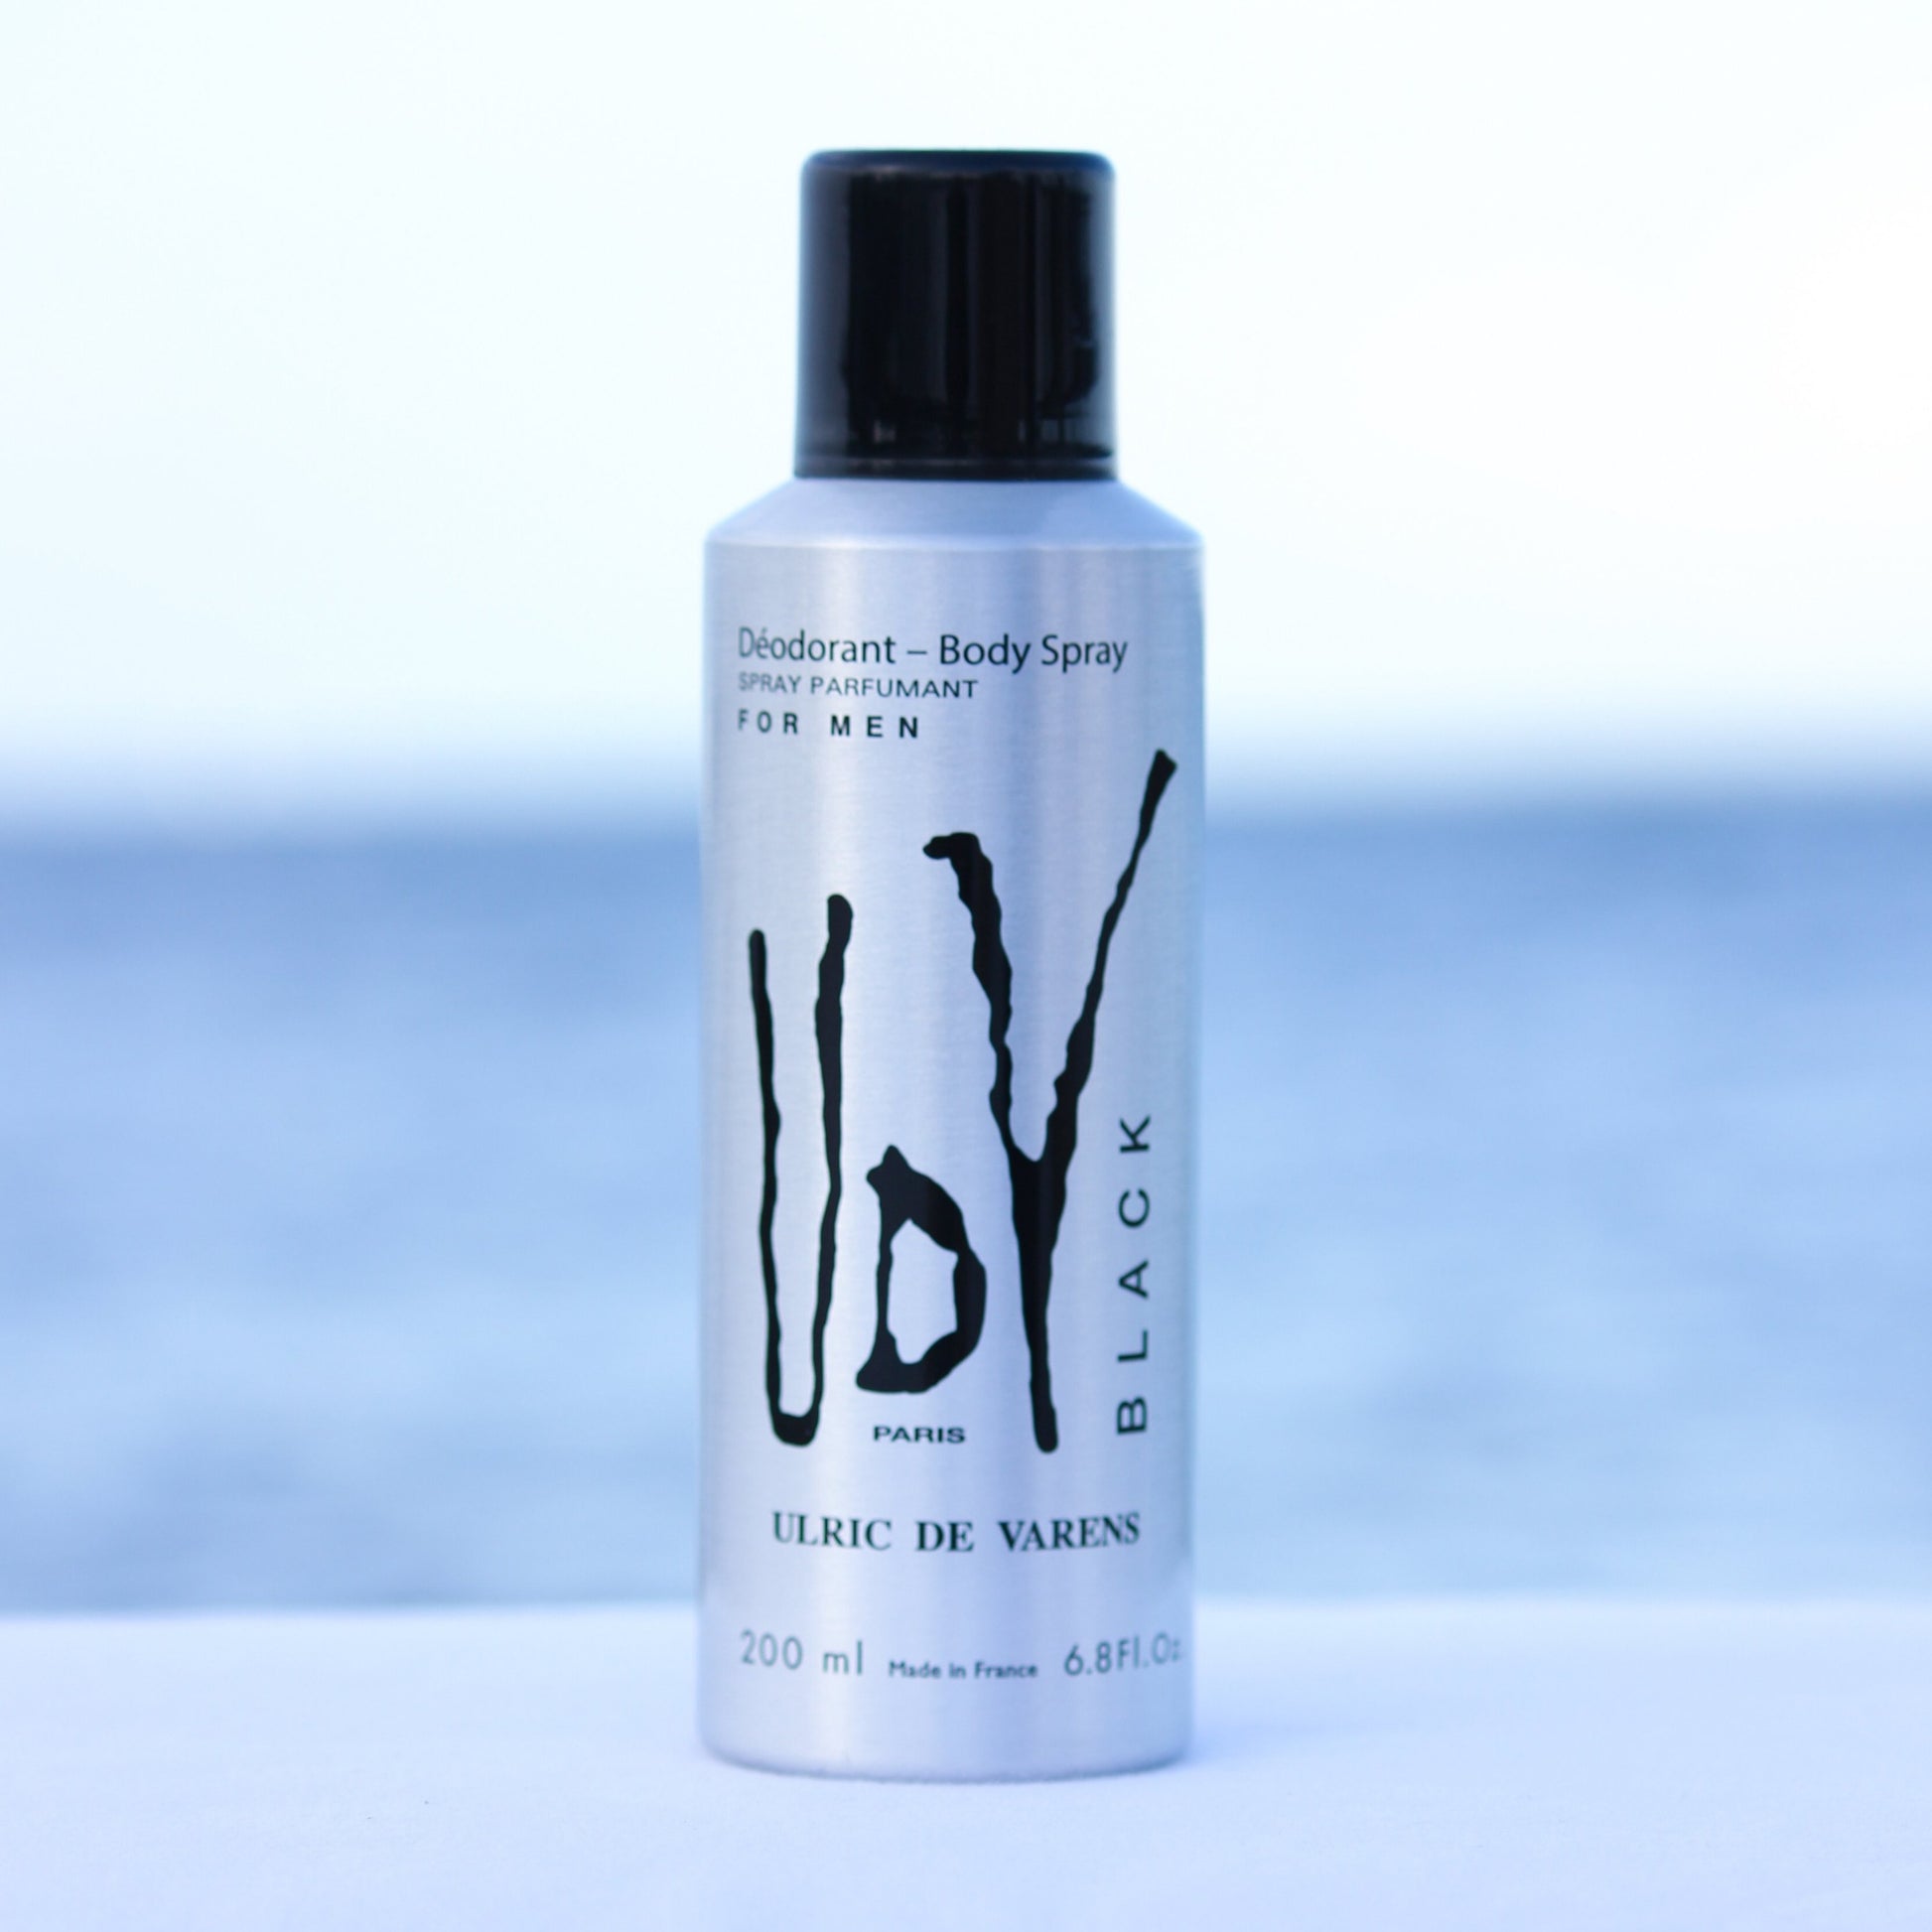 Ulric De Varens UDV Black men's perfume scented deodorant 6.4 oz in front of beach